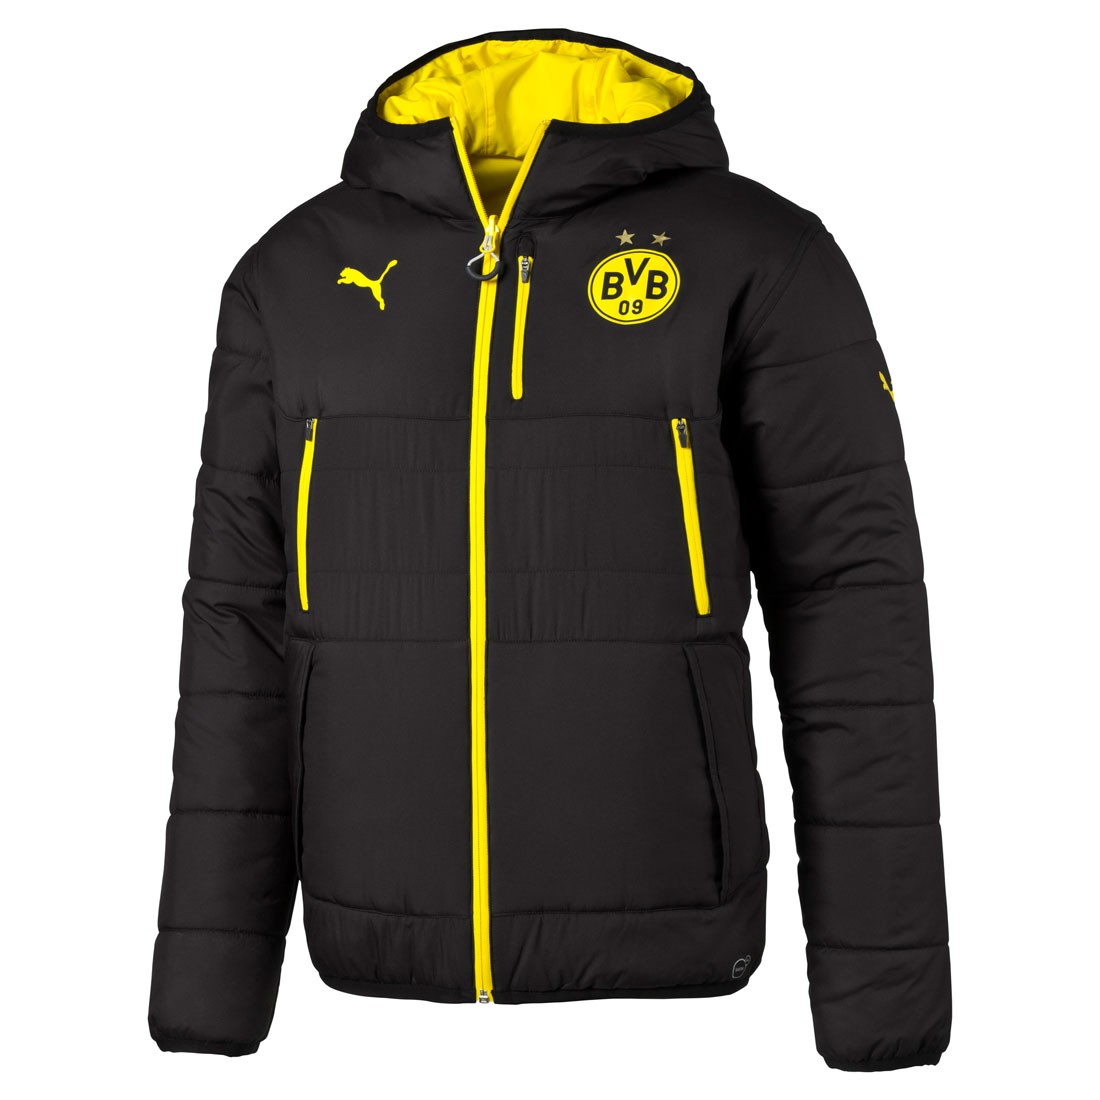 Puma BVB Reversible Jacket Herren 749860 02 Borussia Dortmund Warm Cell